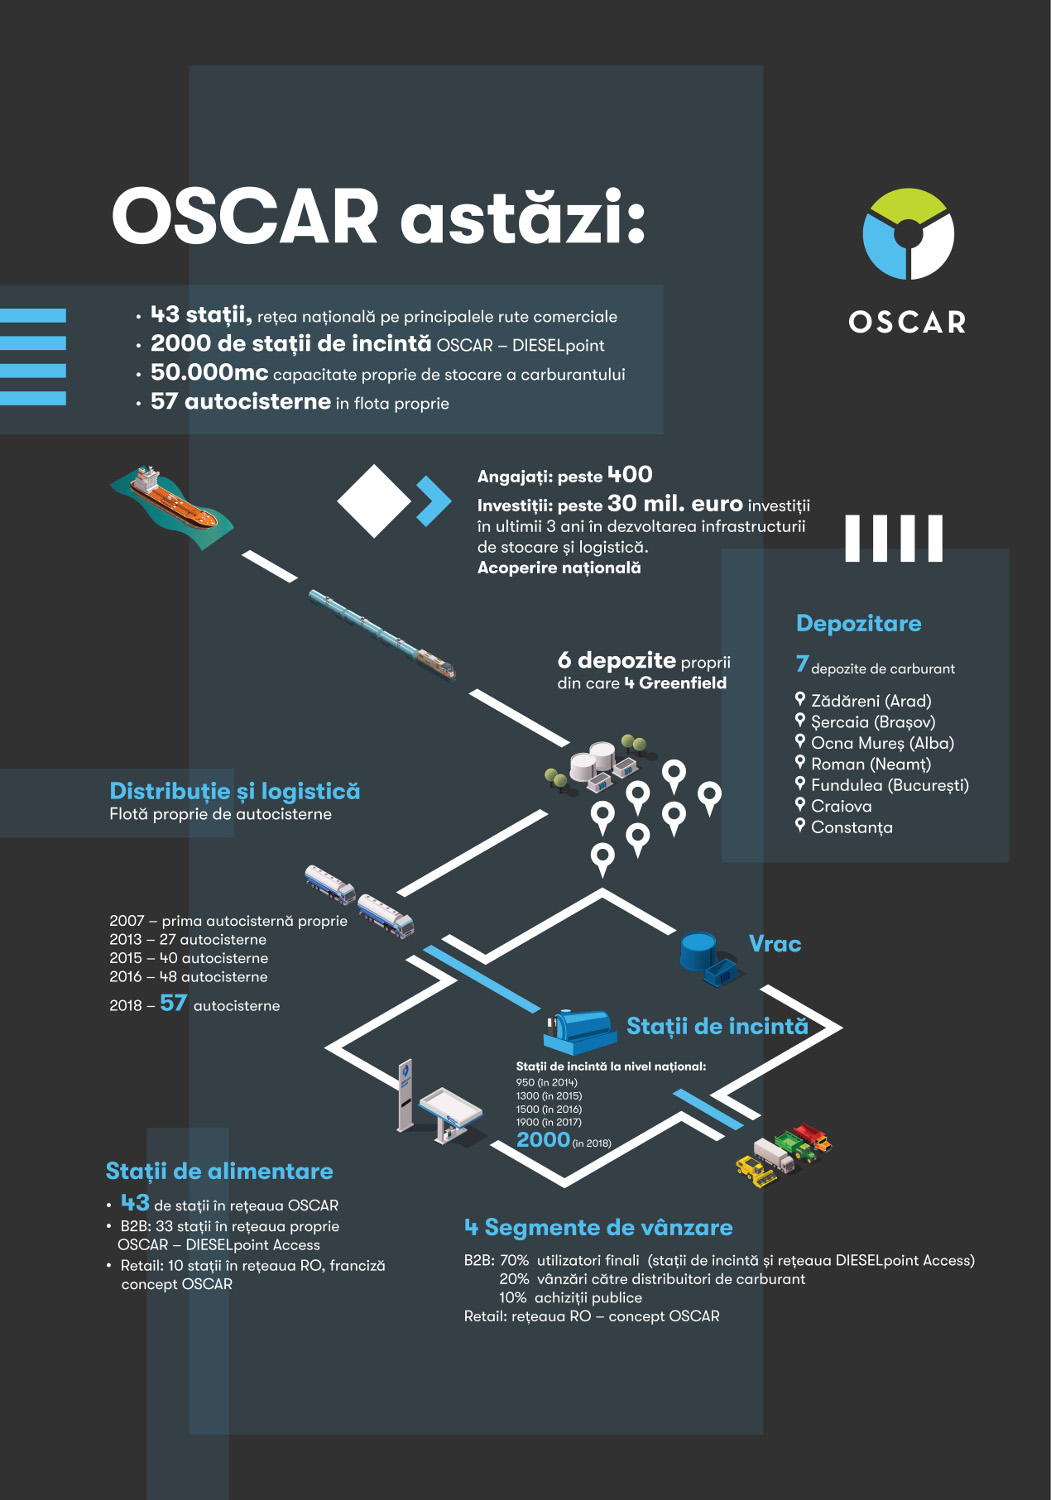 Oscar Downstream - informatii complete infographic